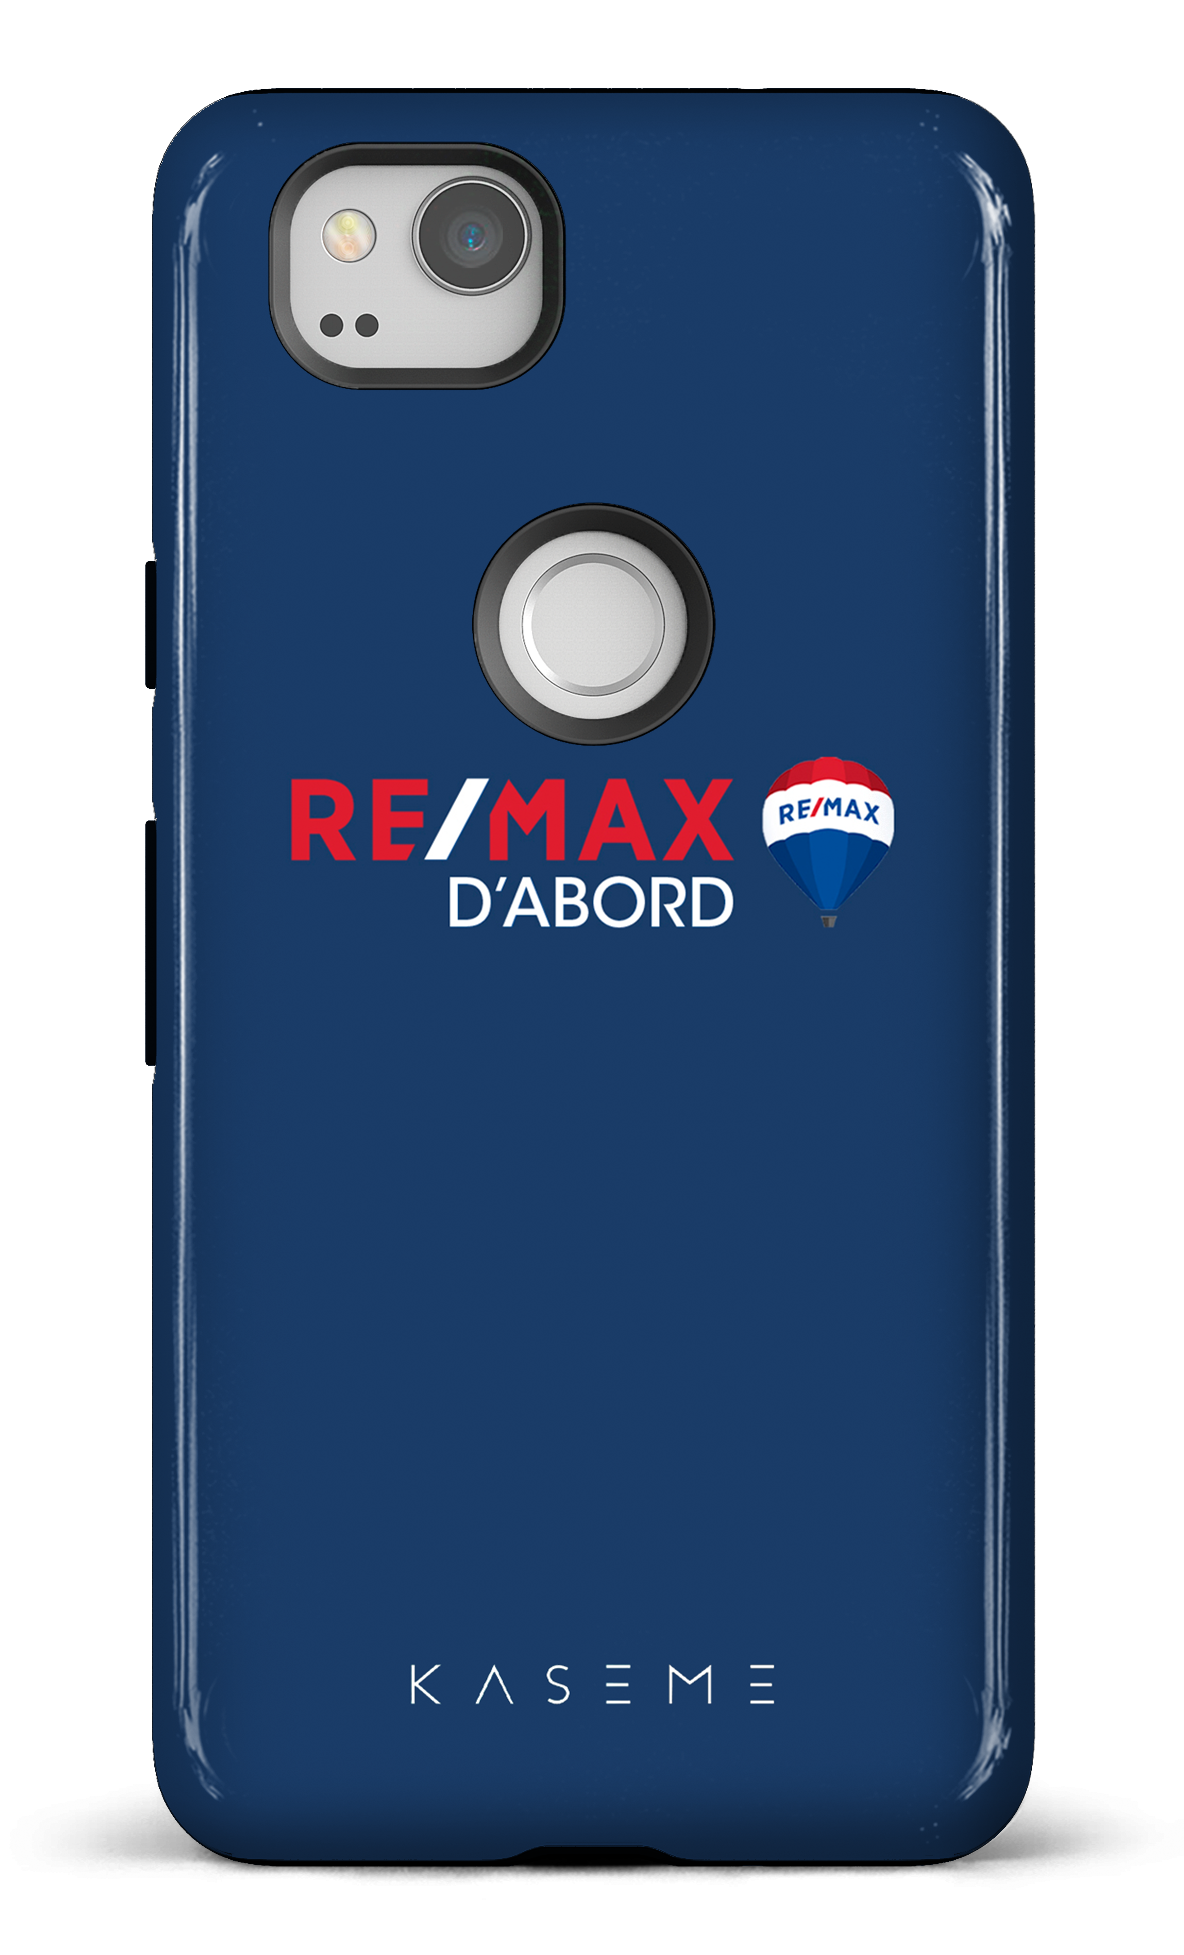 Remax D'abord Bleu - Google Pixel 2